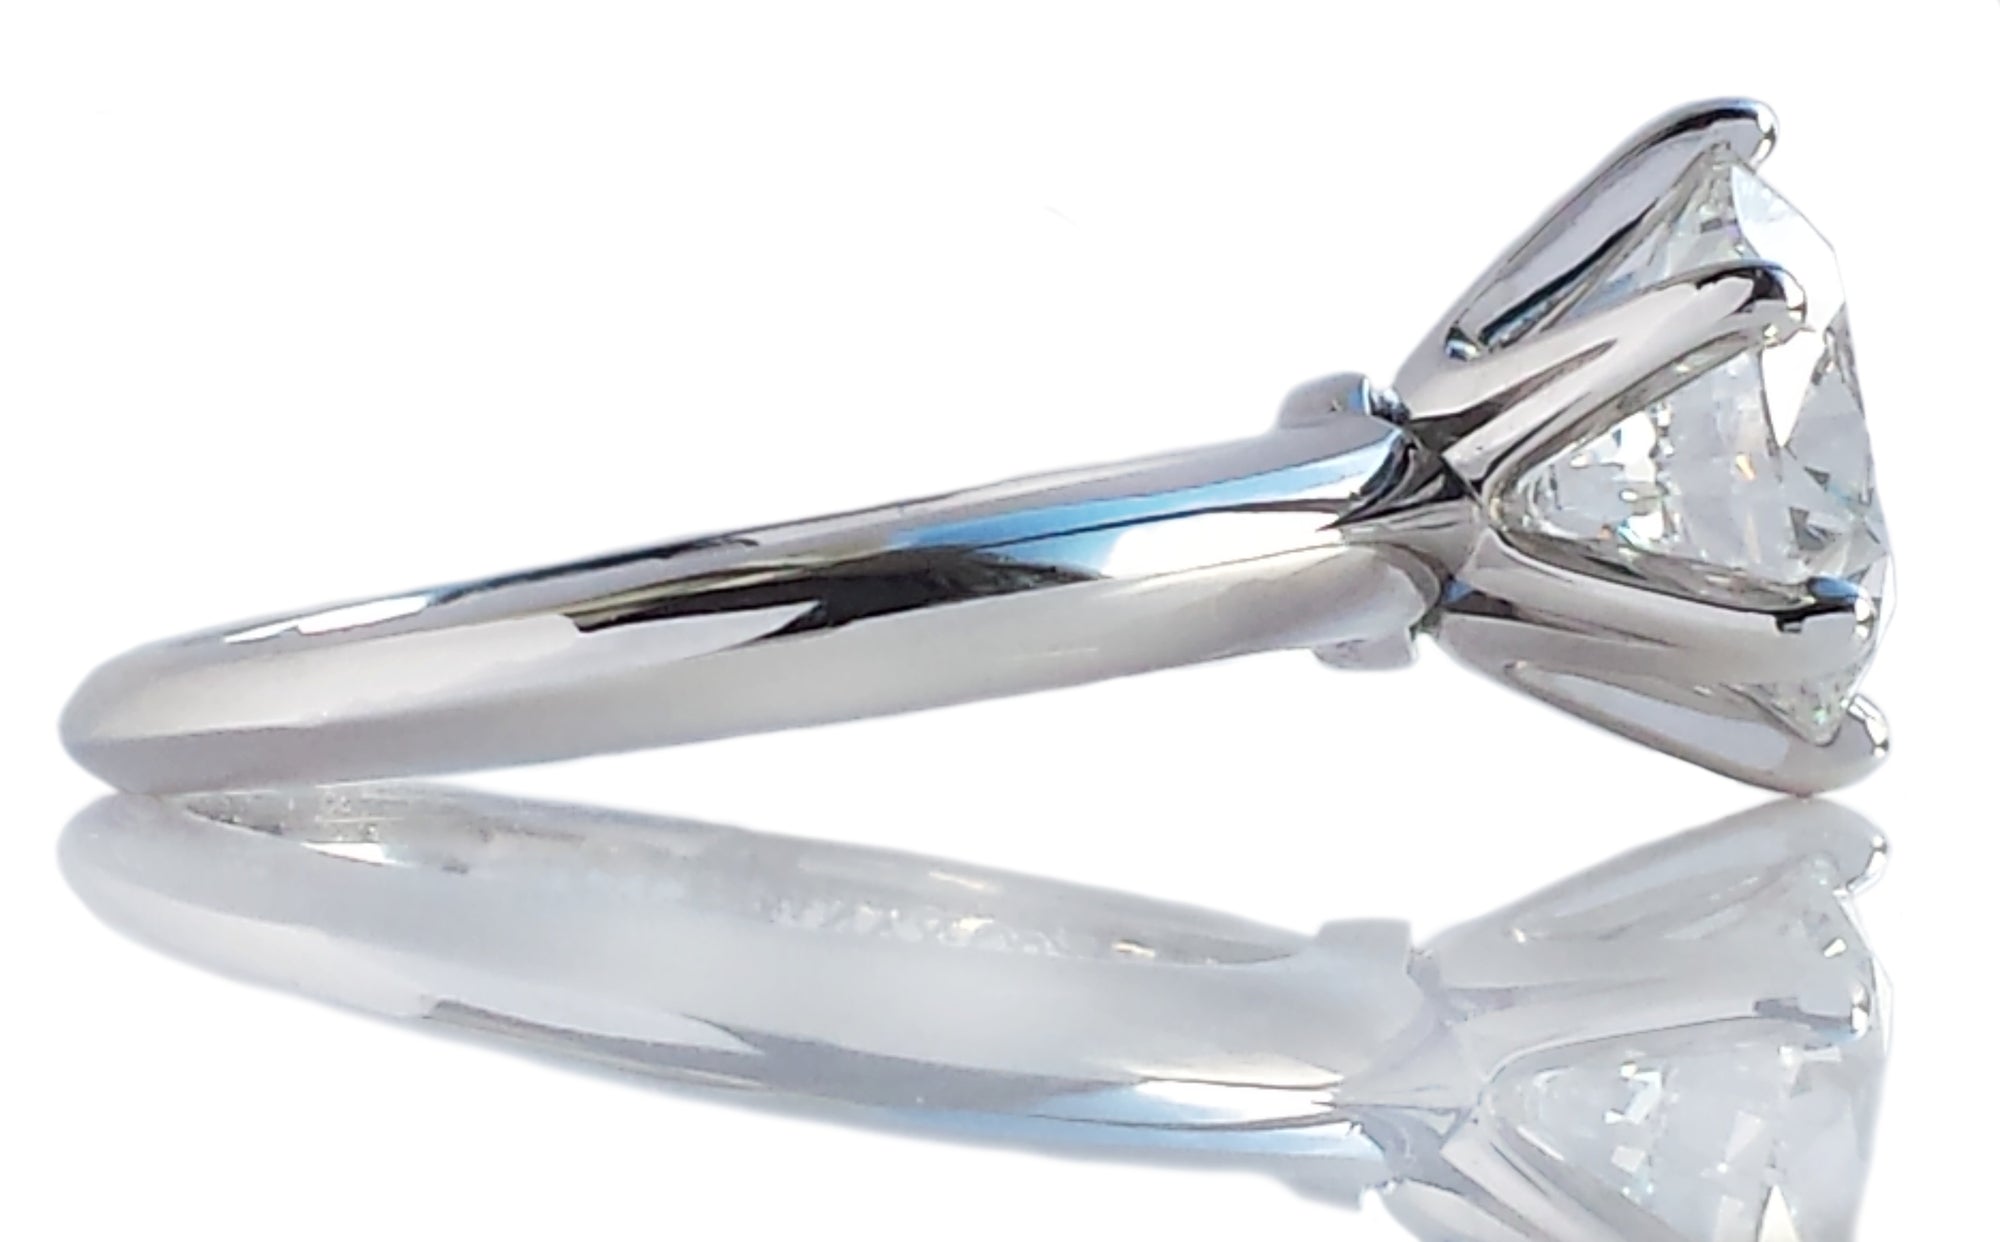 Tiffany & Co. 2.56ct E/VS1 Triple XXX Round Brilliant Cut Diamond Engagement Ring